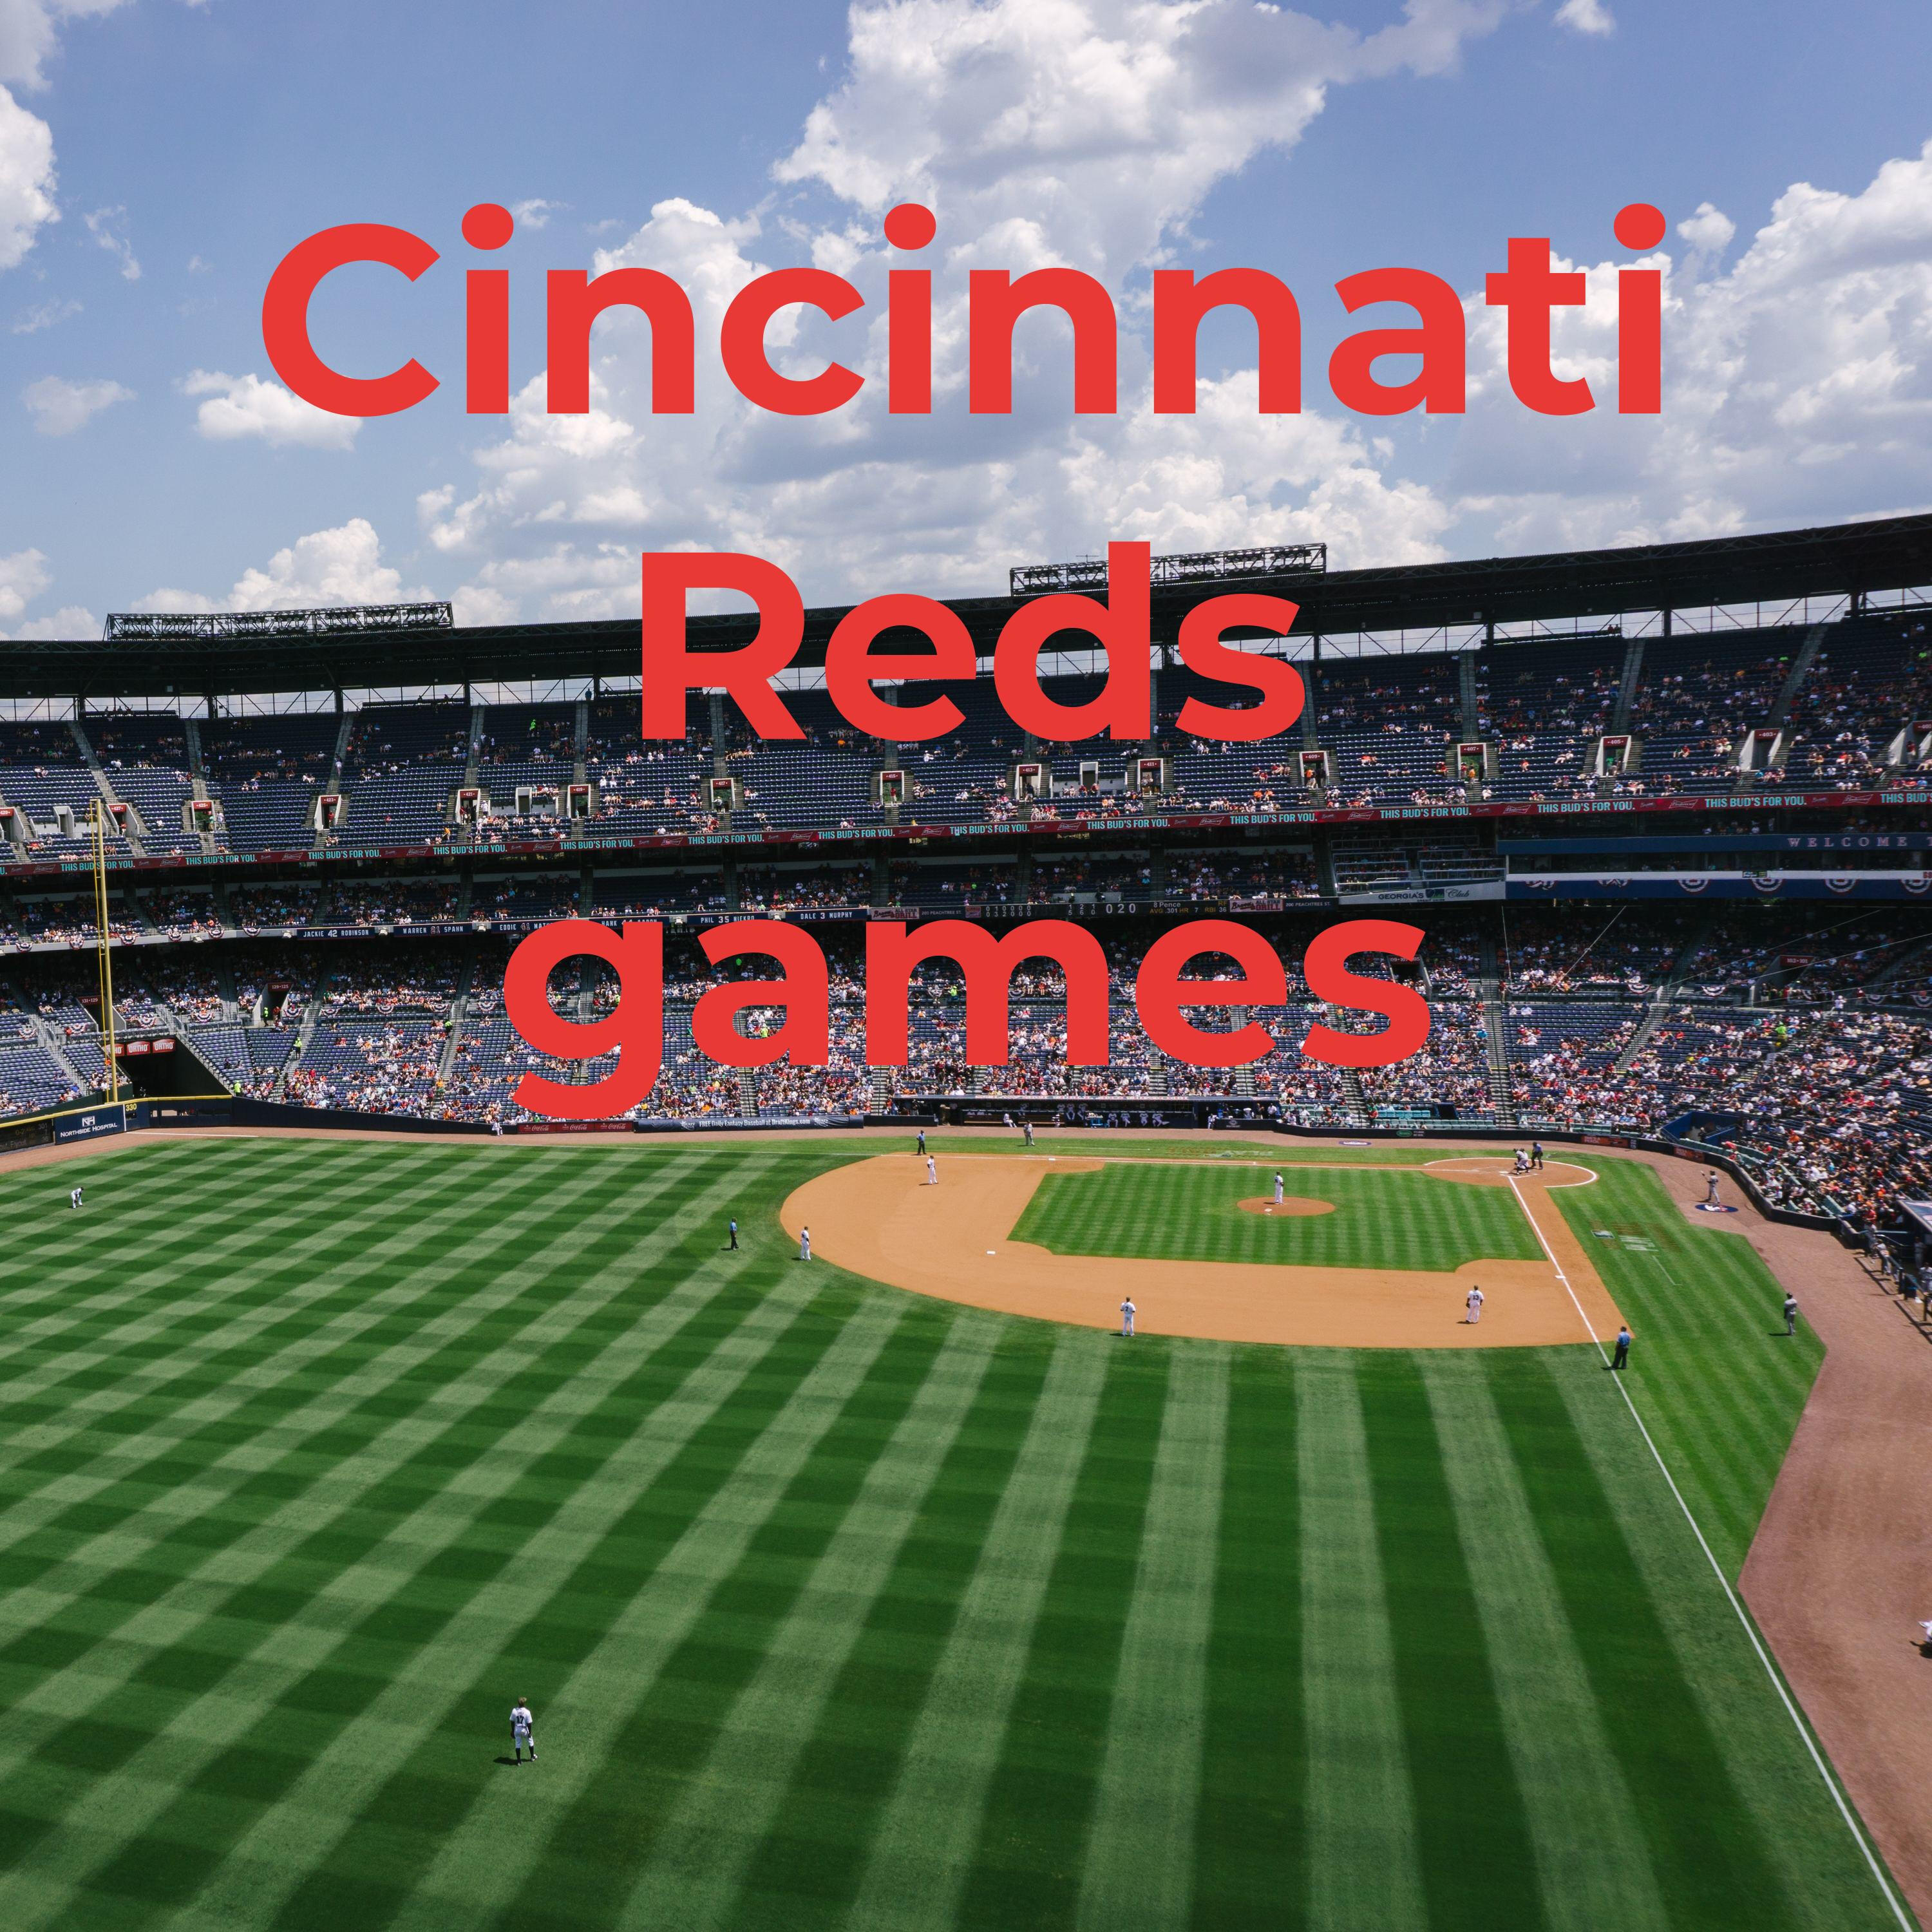 Cincinnati Reds games iHeart